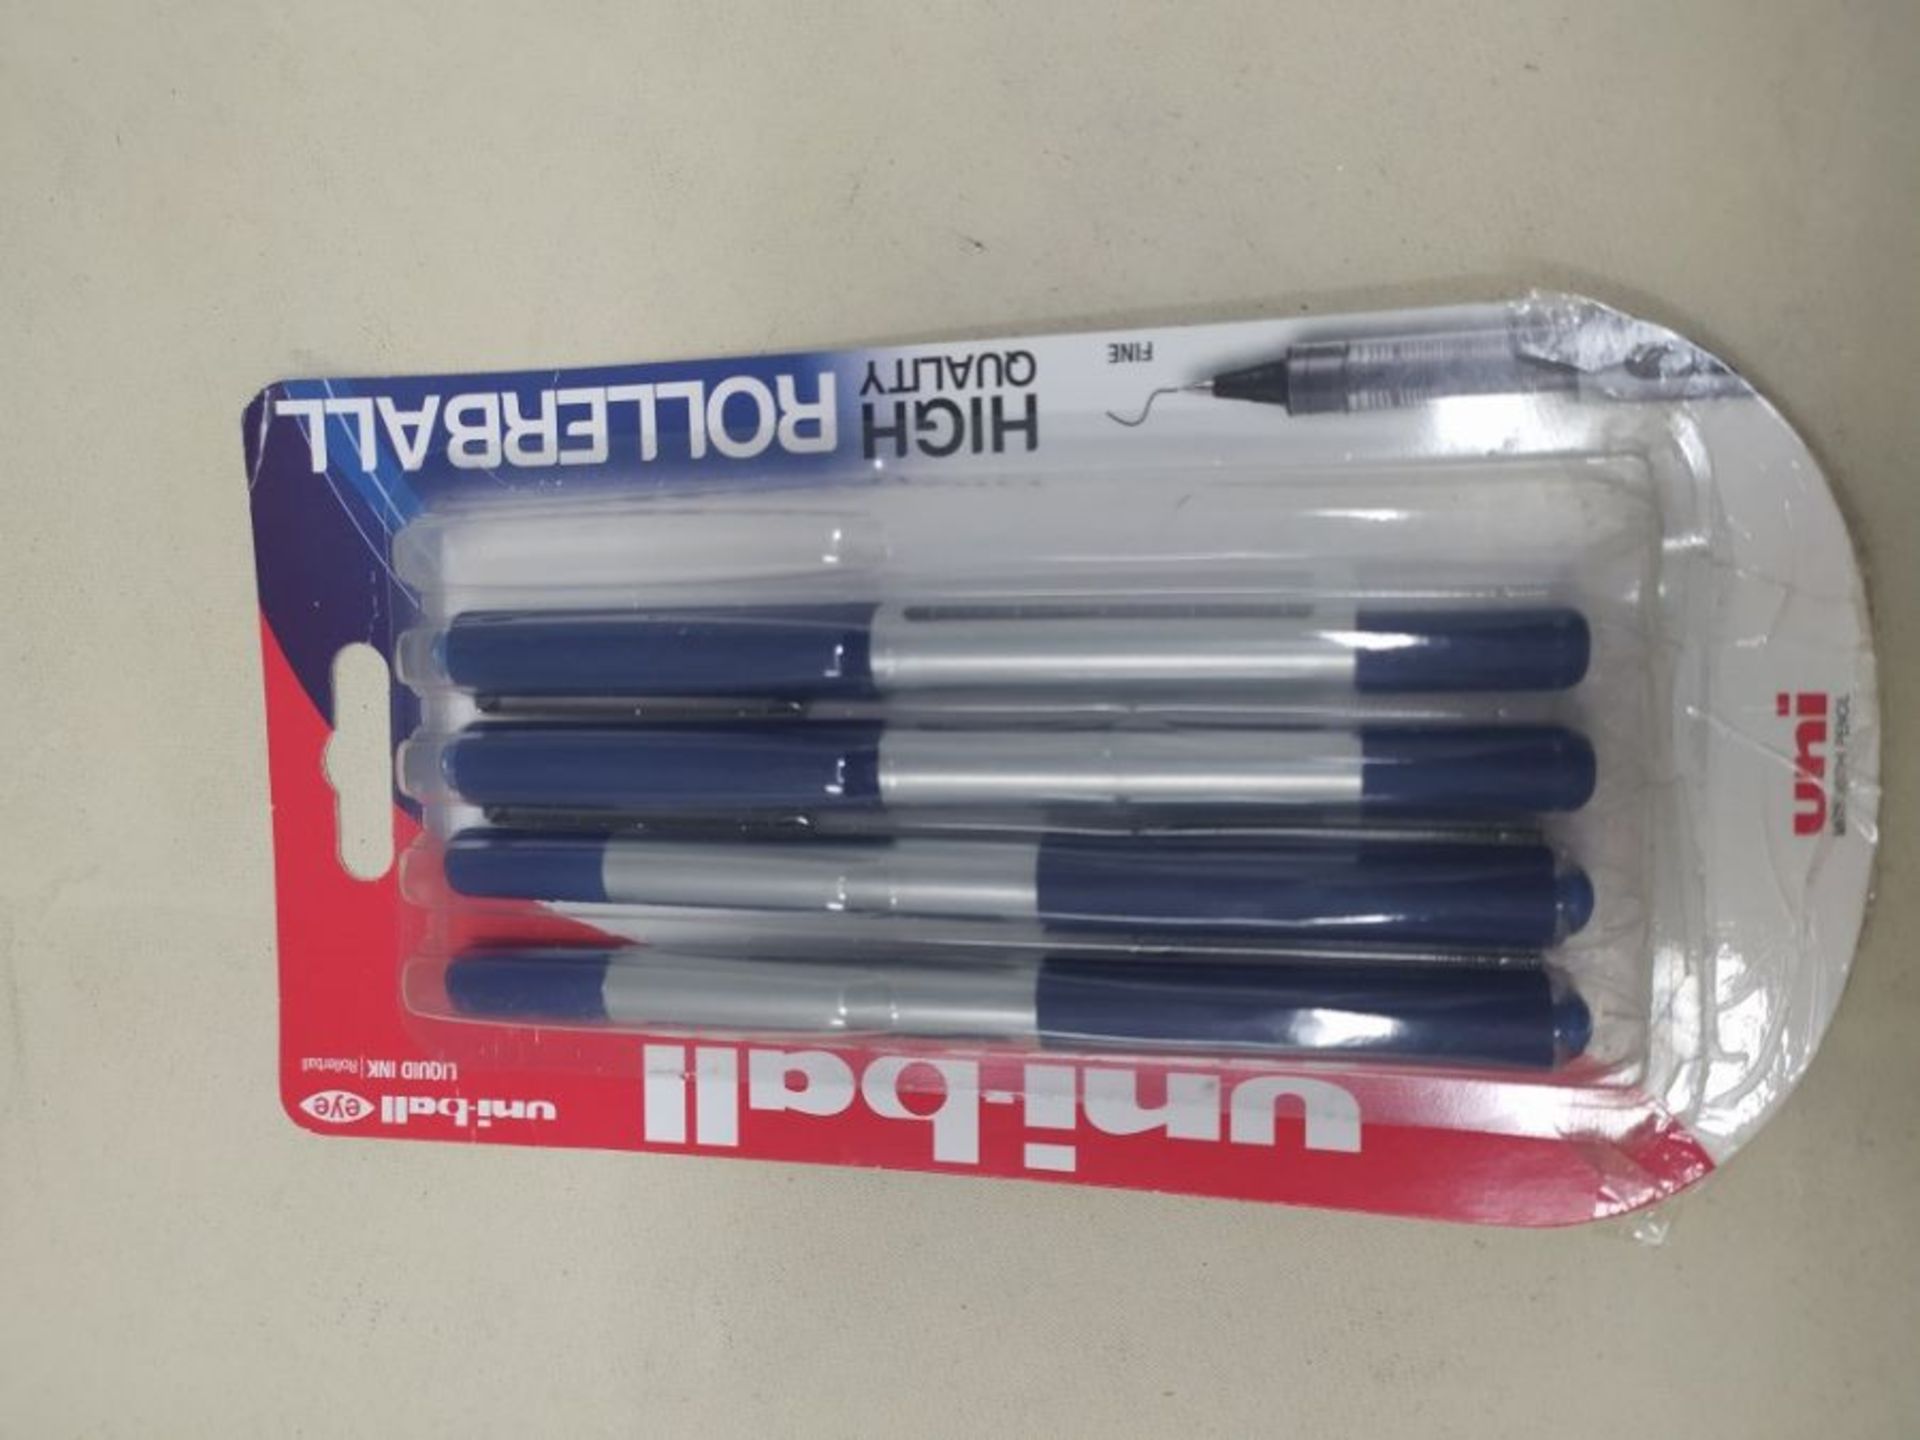 uni-ball Eye Micro UB-150 Rollerball Pen - Blue, Pack of 5 - Image 2 of 2